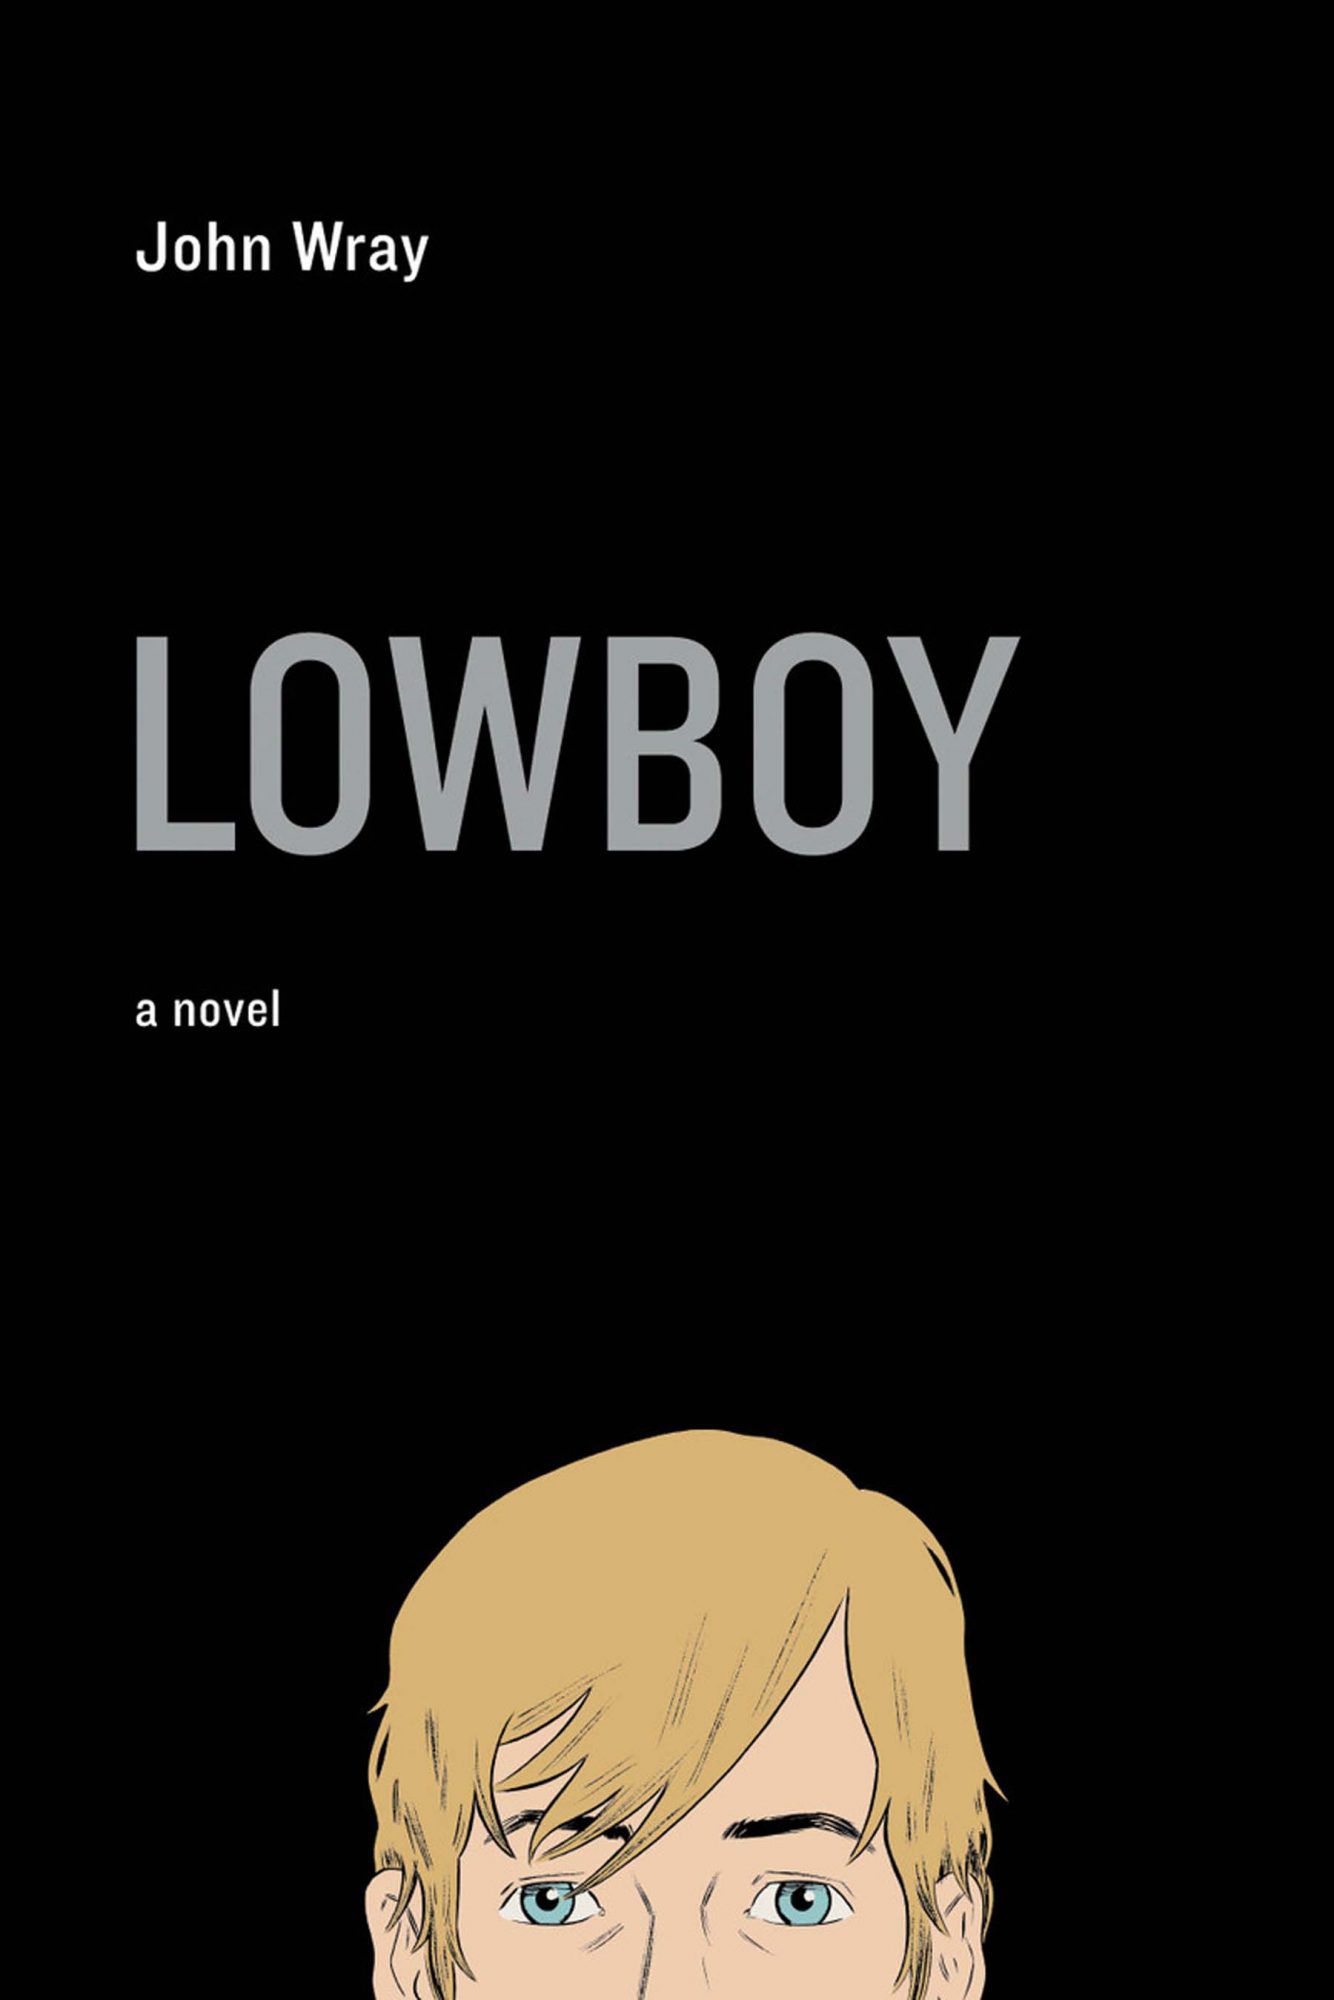 Lowboy by John Wray (2009)